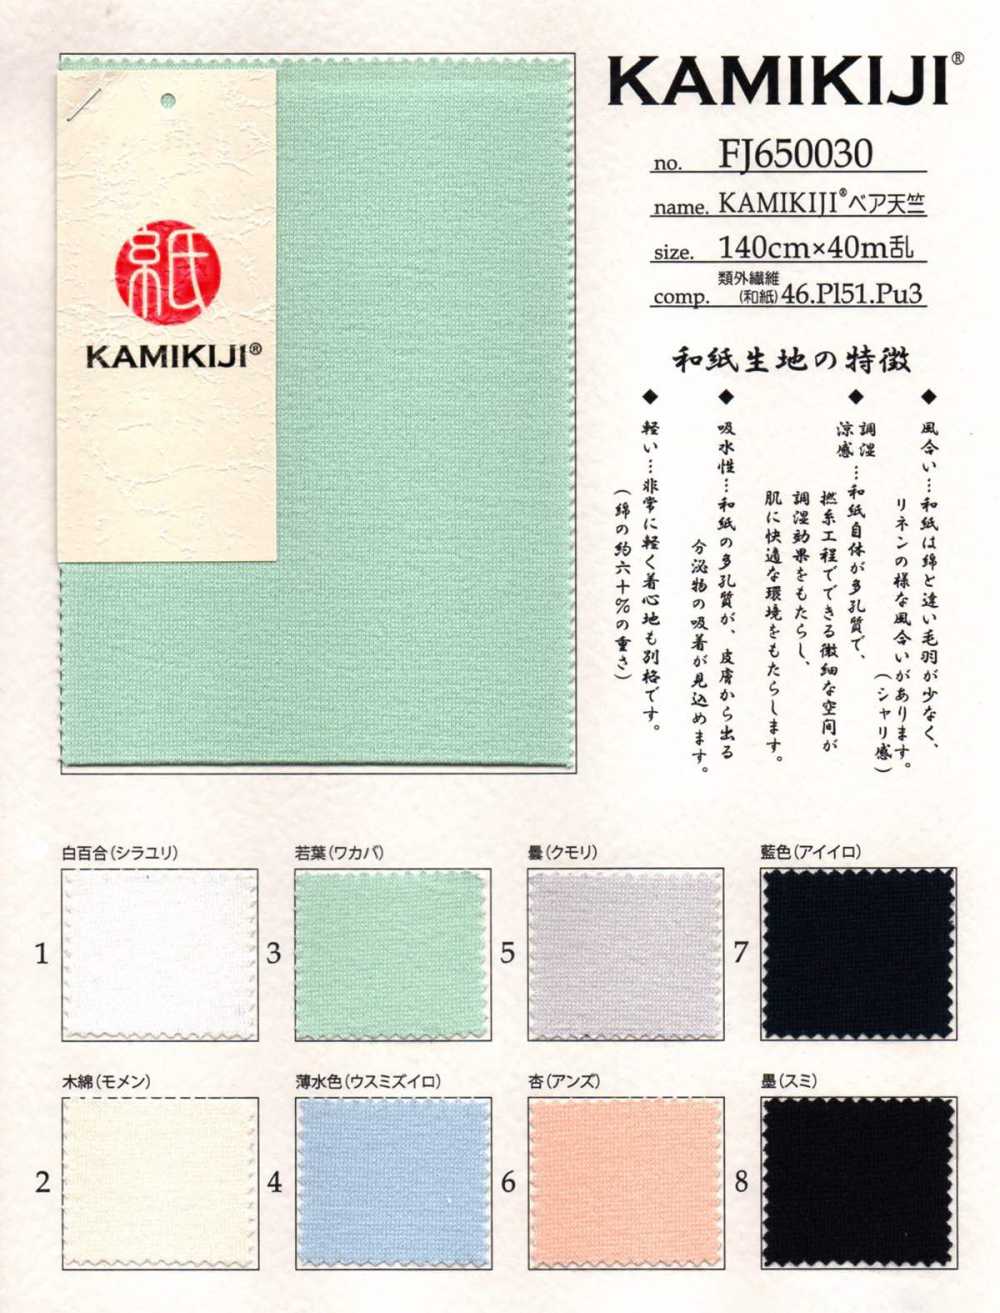 FJ650030 KAMIKIJI® 裸豚平針織物[面料] Fujisaki Textile